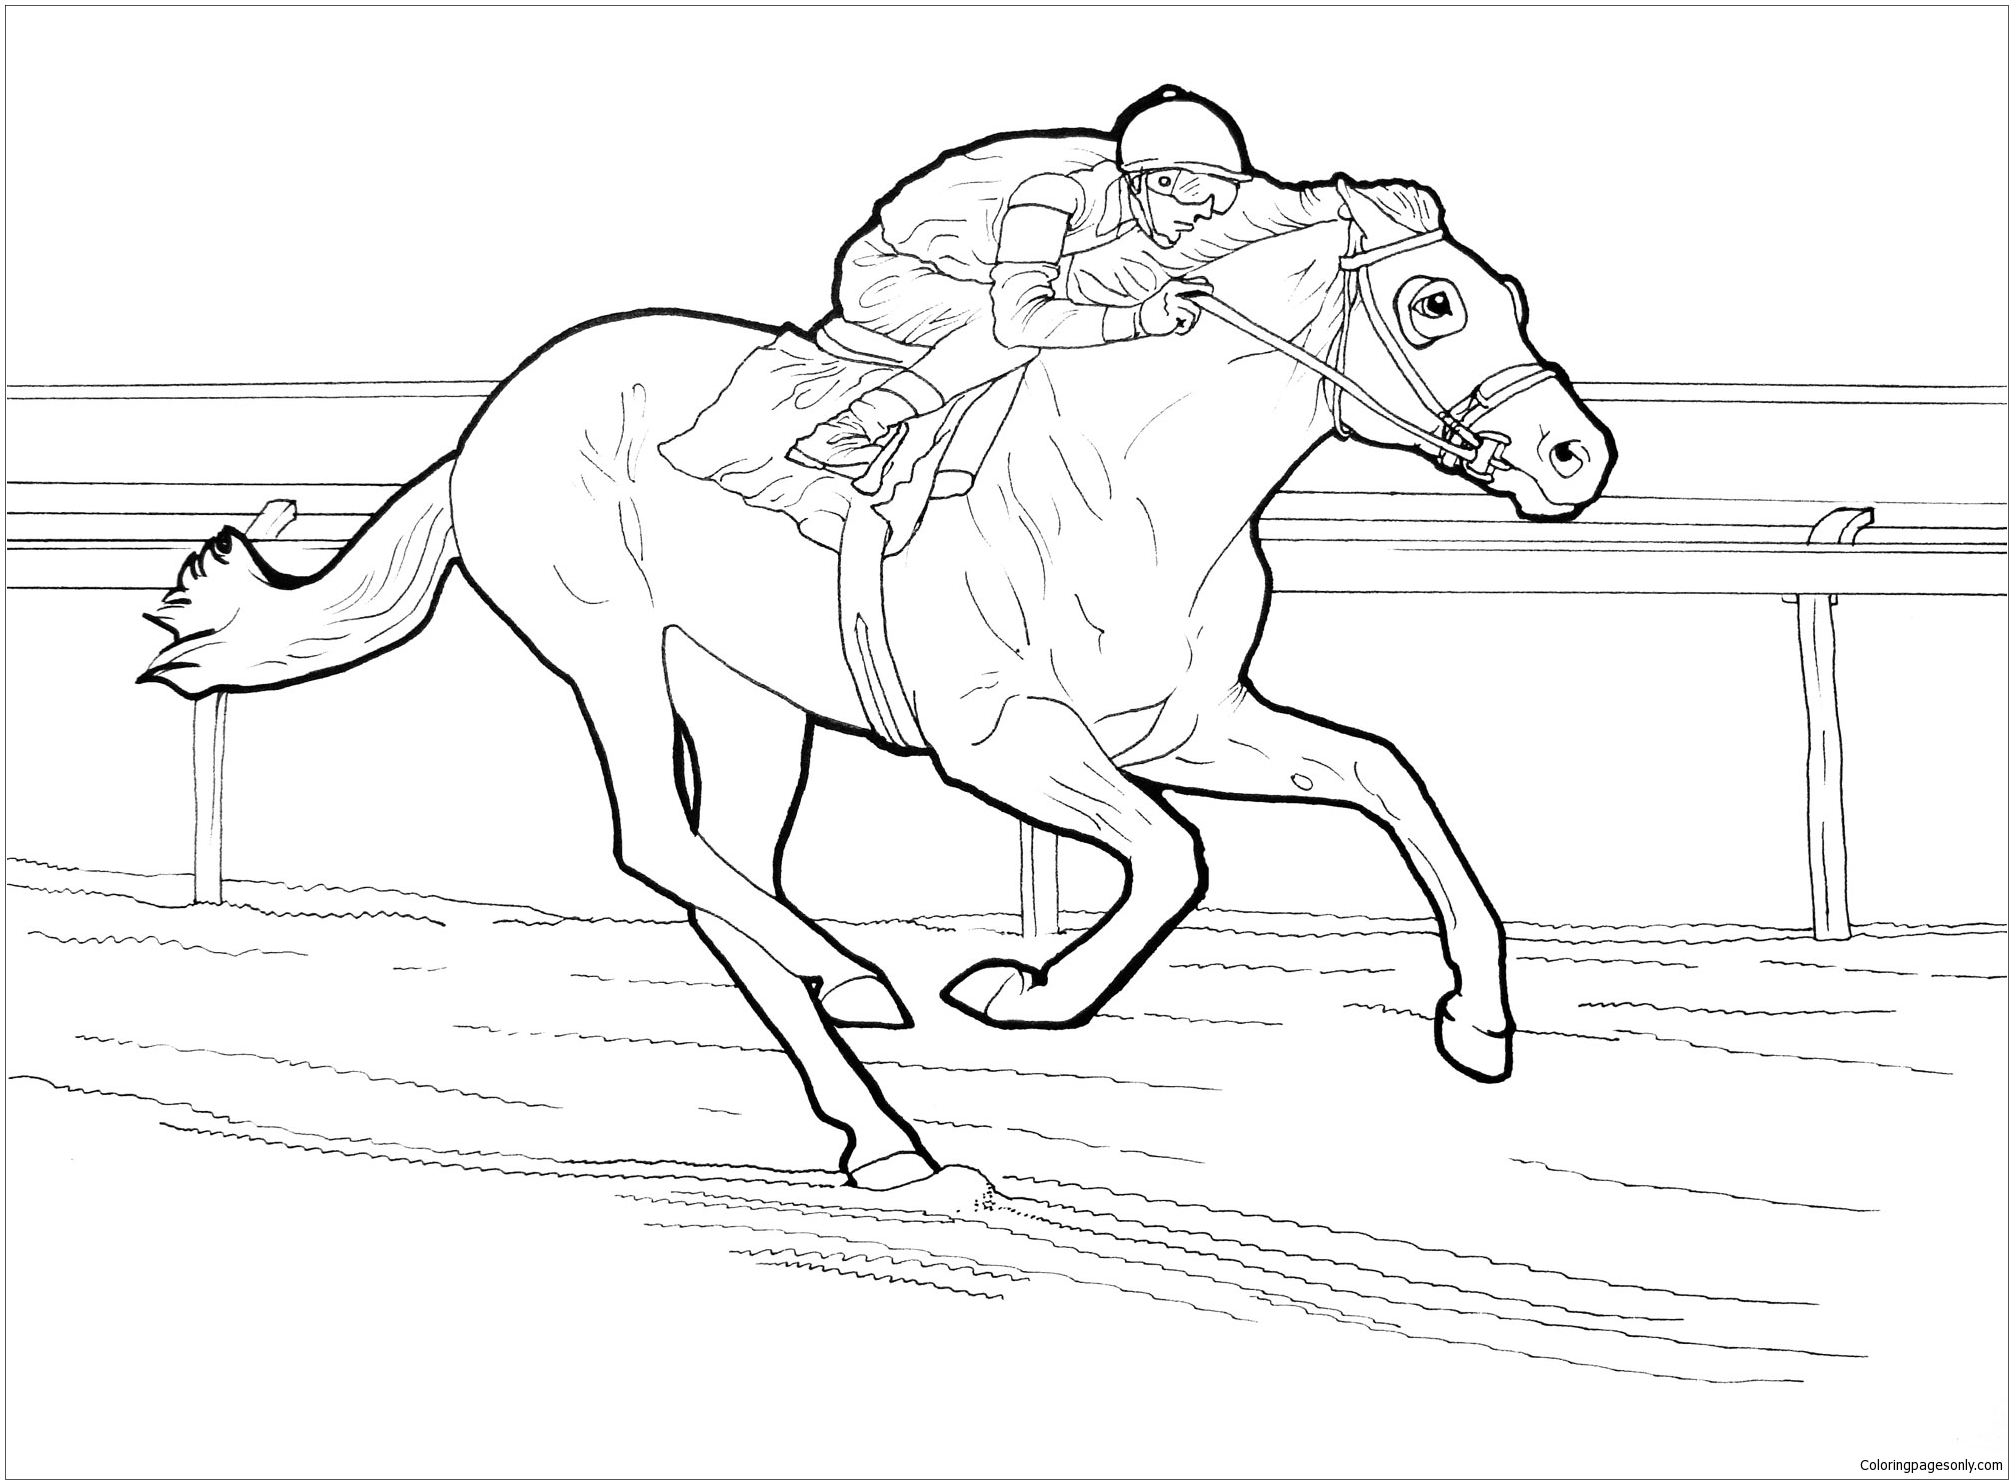 Chevaux de course de Horse